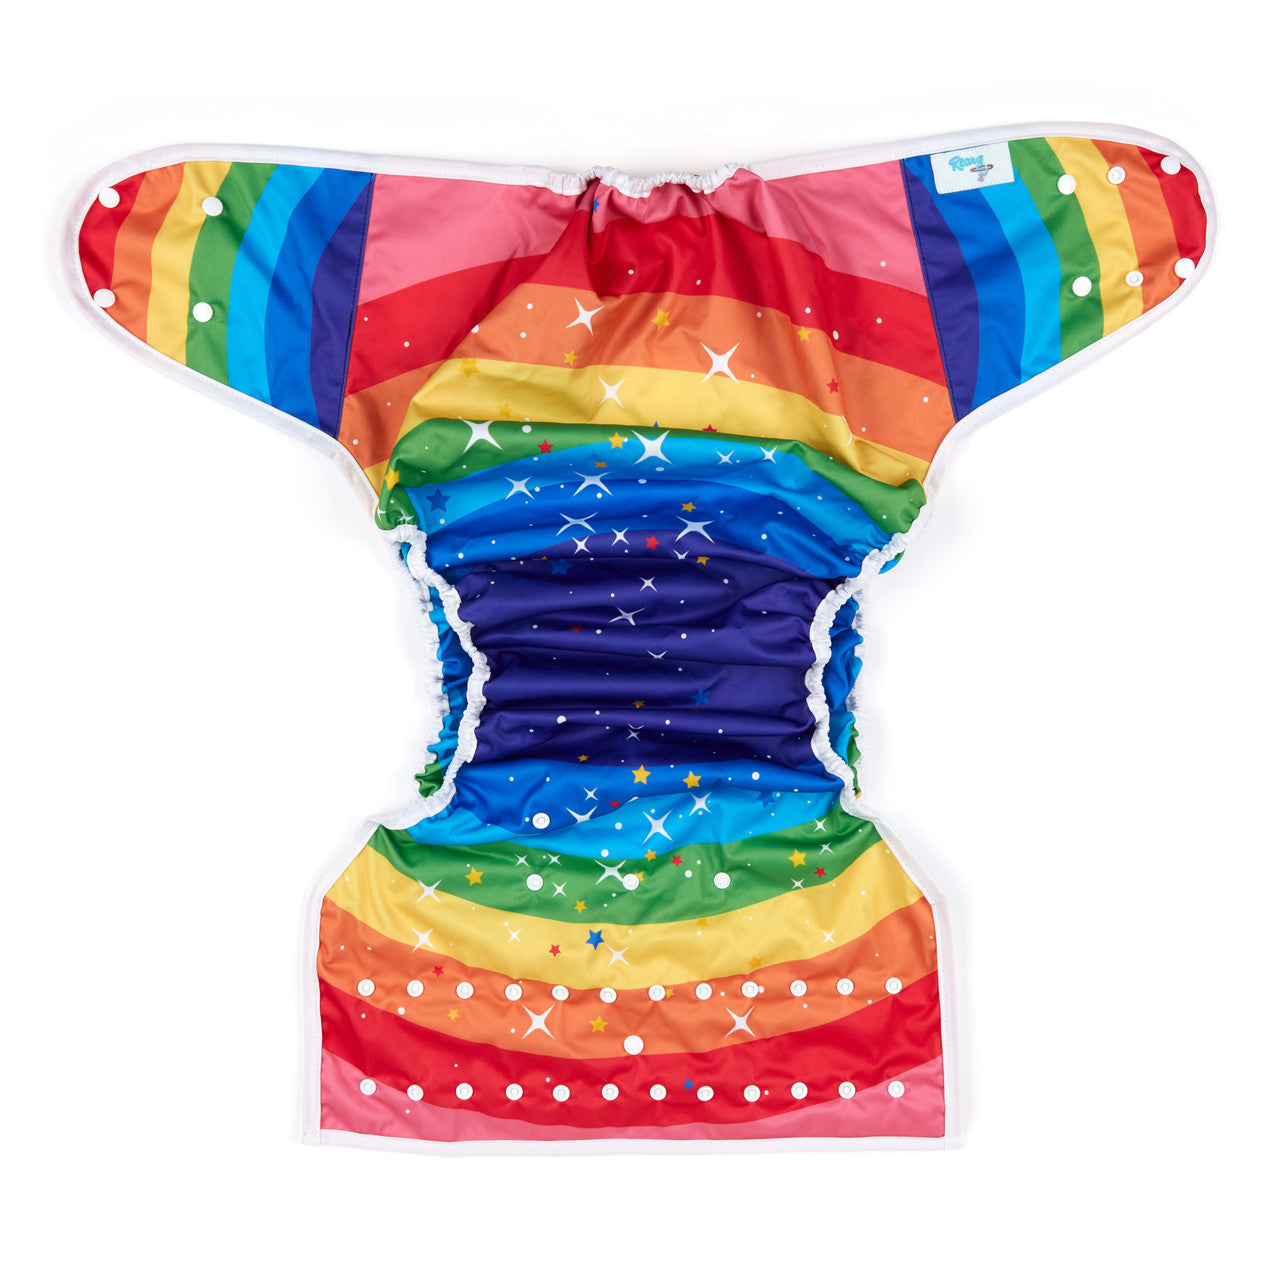 Rearz - Adult Diaper Cover/Wrap - Rainbow Star